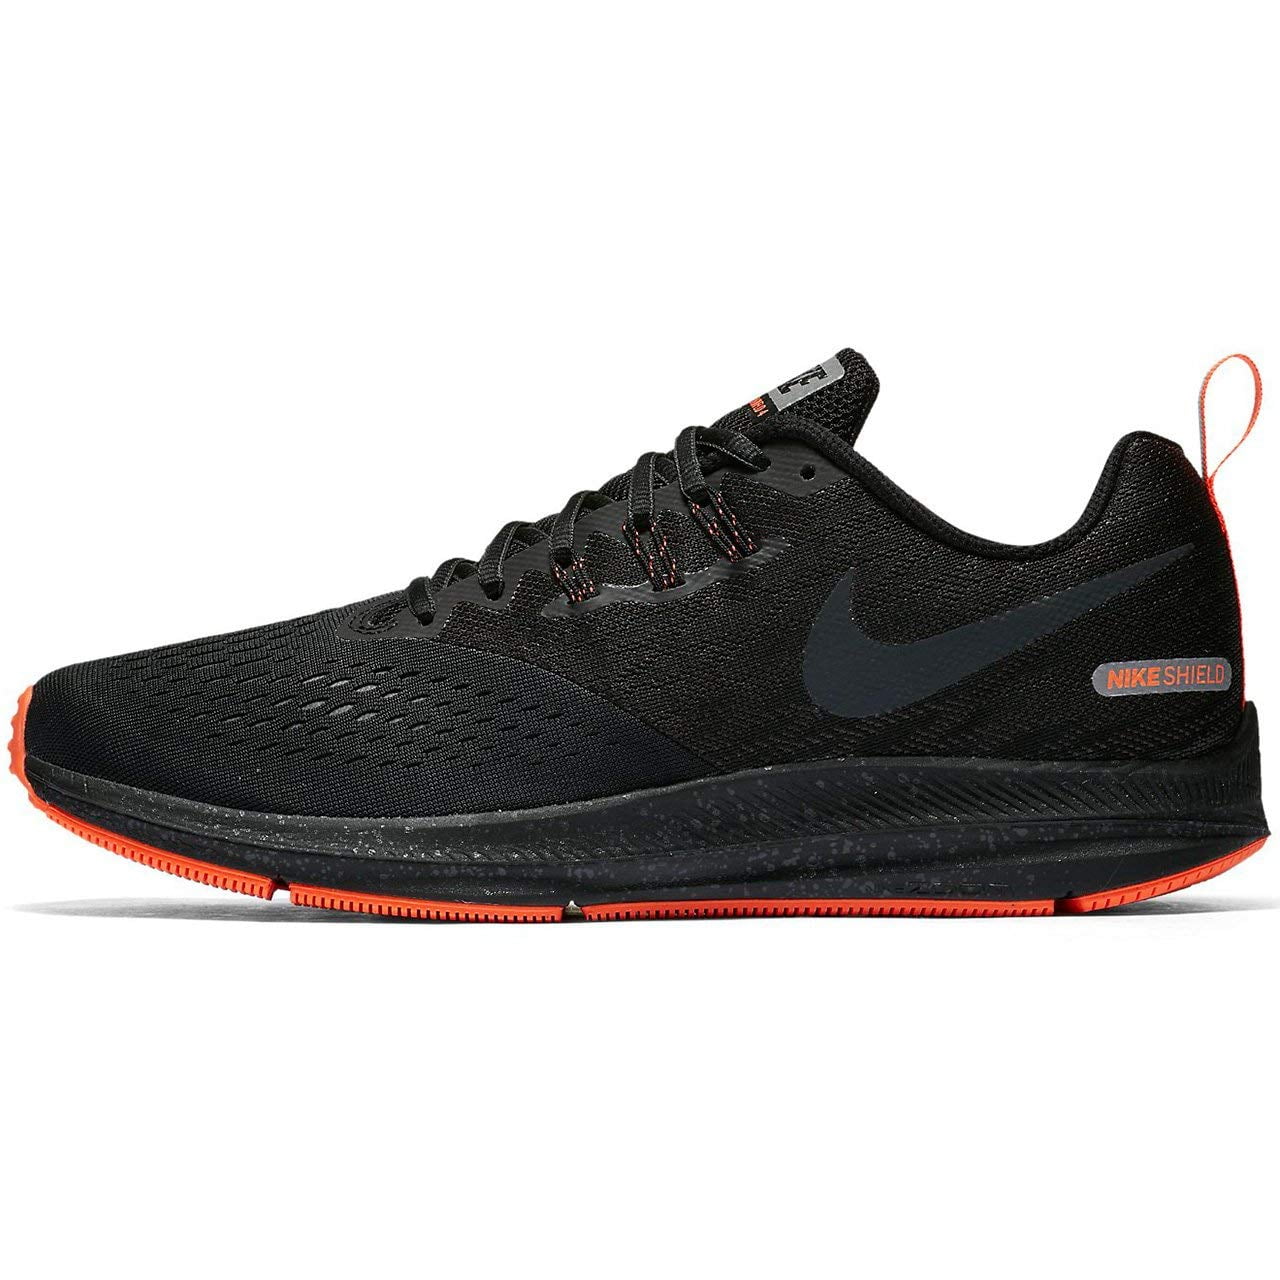 Lío Geometría opción Nike Zoom Winflo 4 Shield Running Shoe, Black/Anthracite-Anthracite, 11 -  Walmart.com